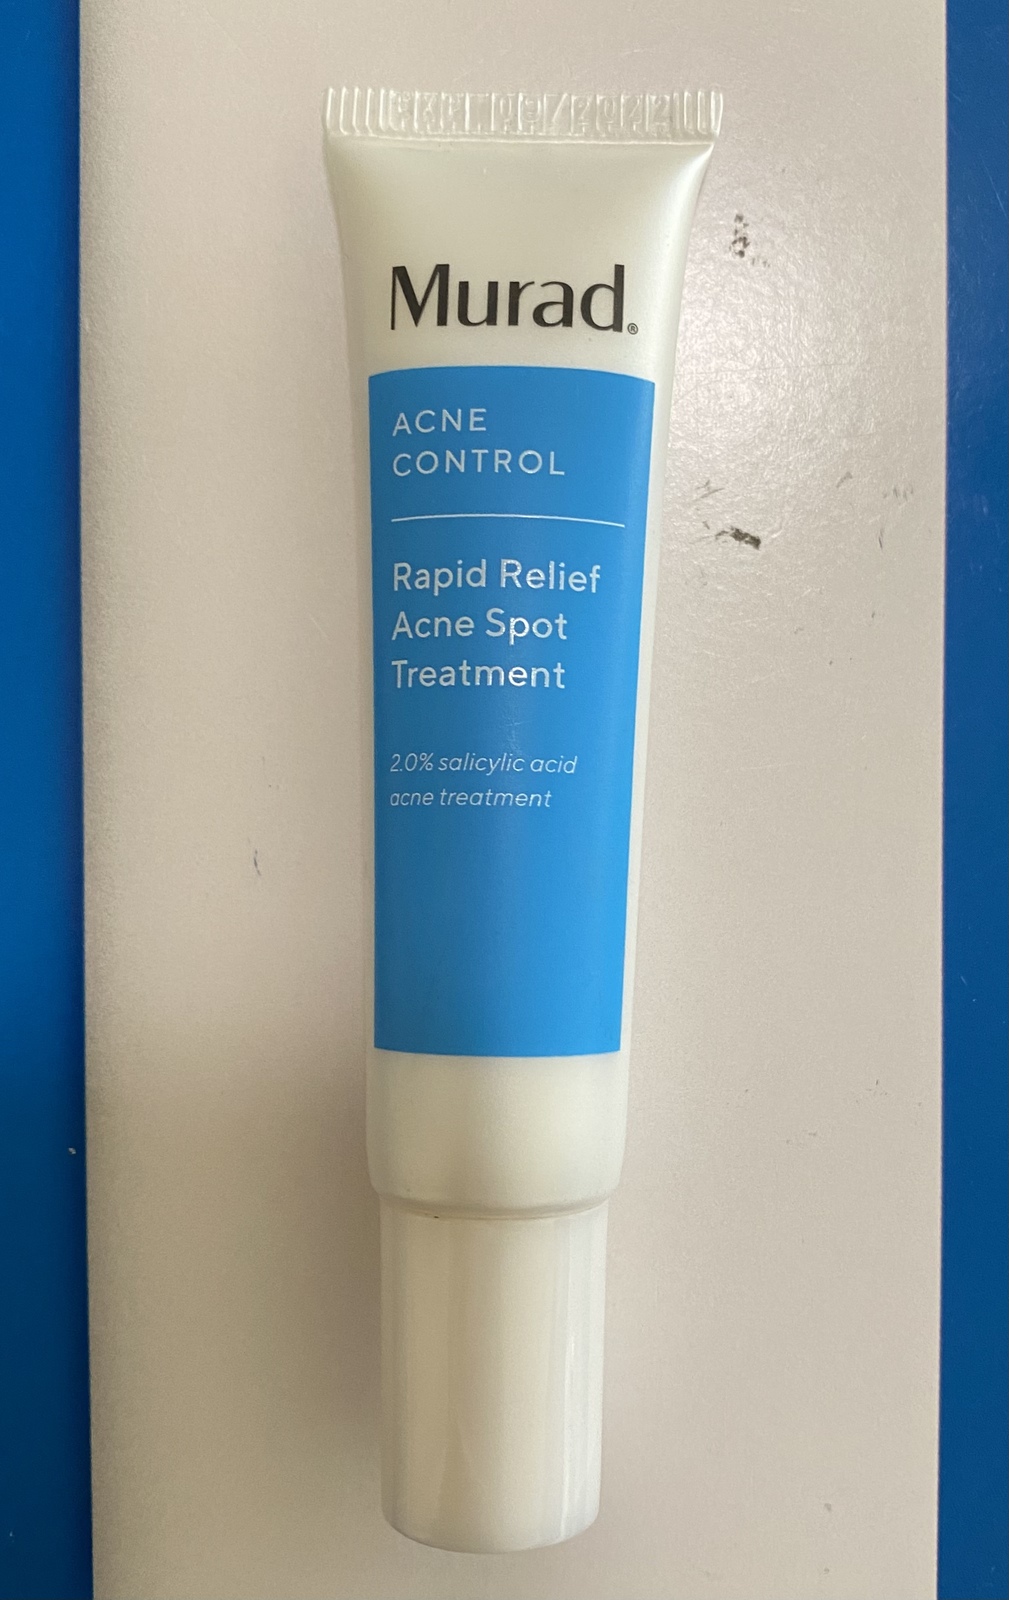 MURAD Rapid Relief Acne Spot Treatment. 0.5 oz - $18.00